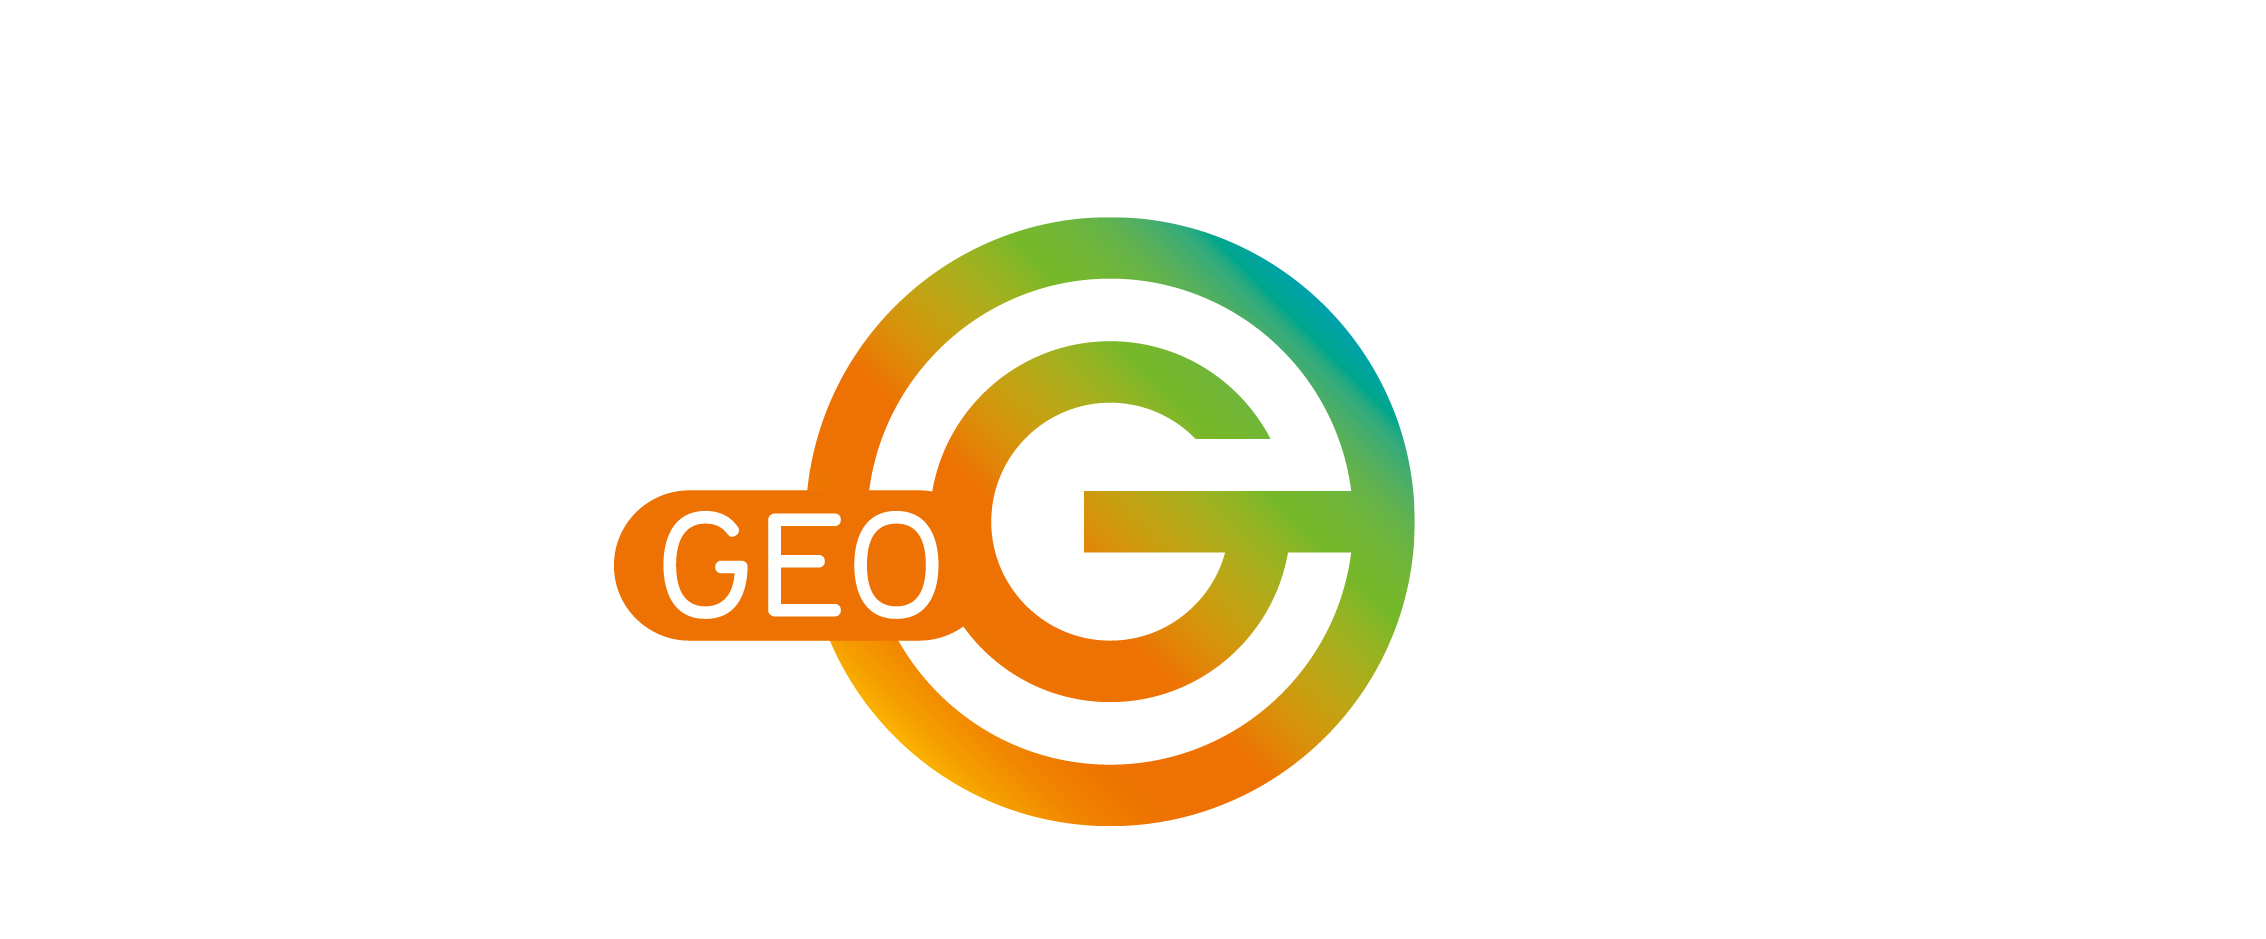 GEO logo 